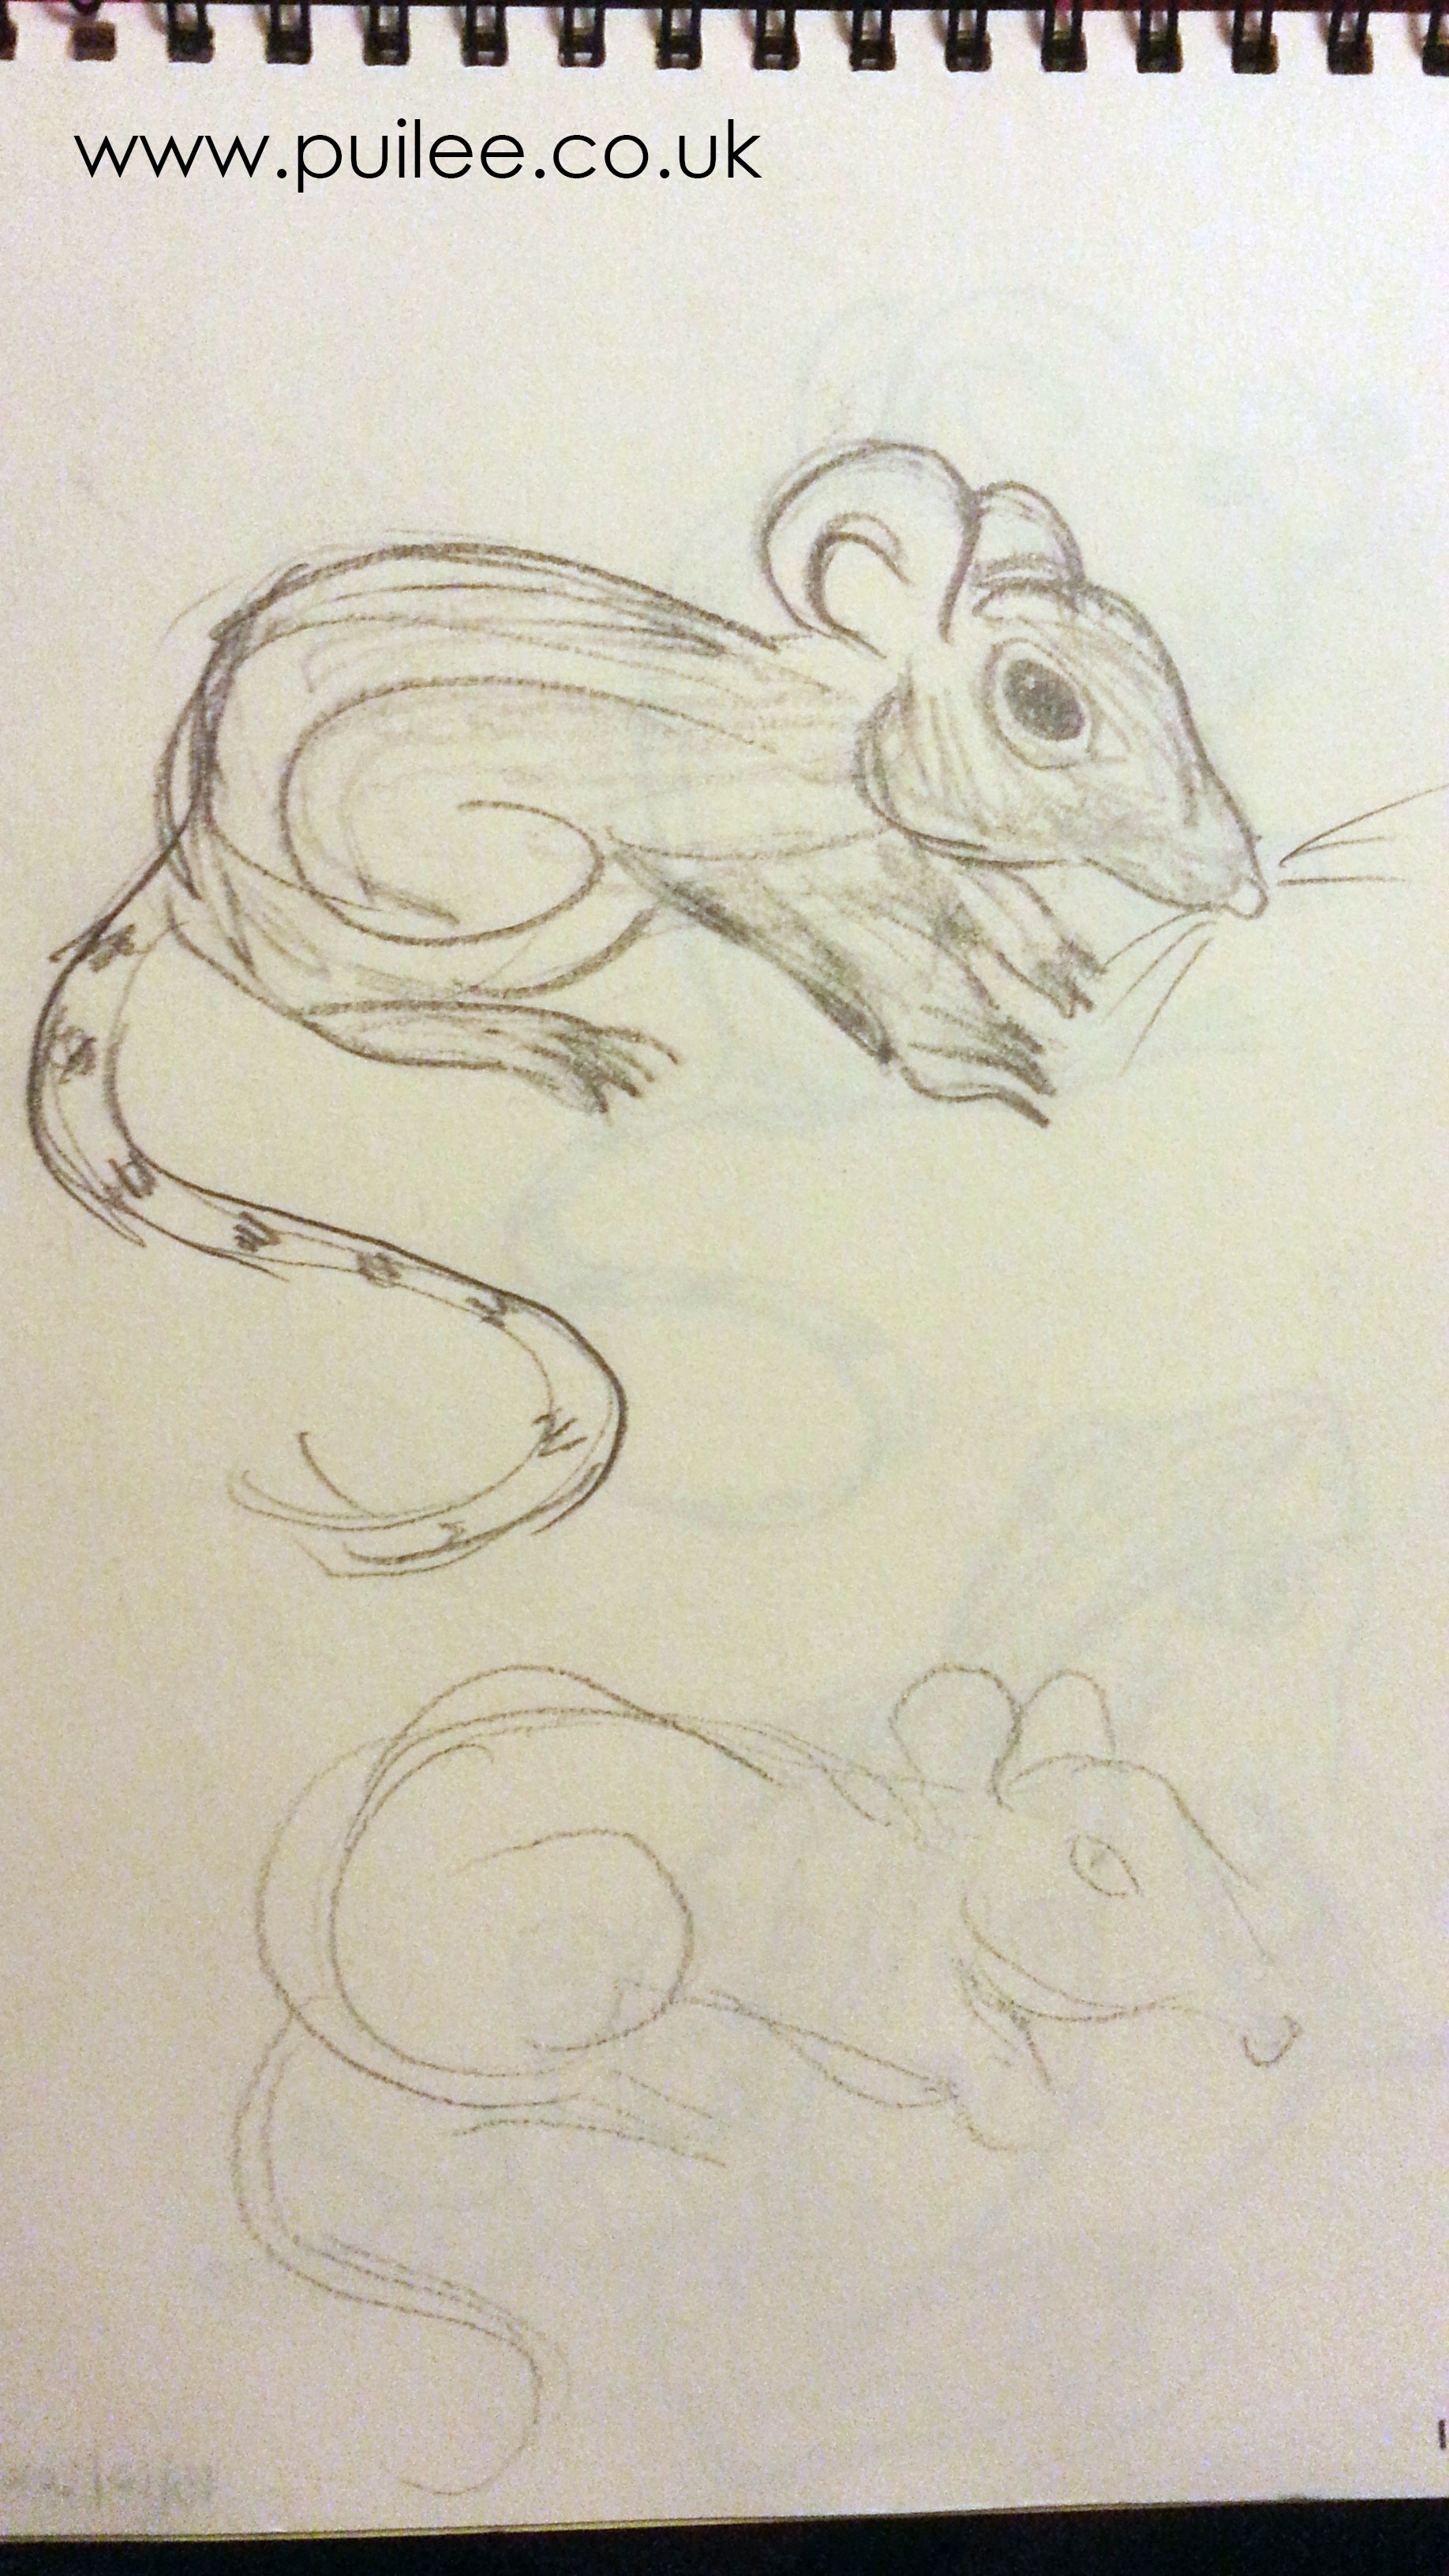 Rat sketches (2014) - pencil on paper - Pui Lee